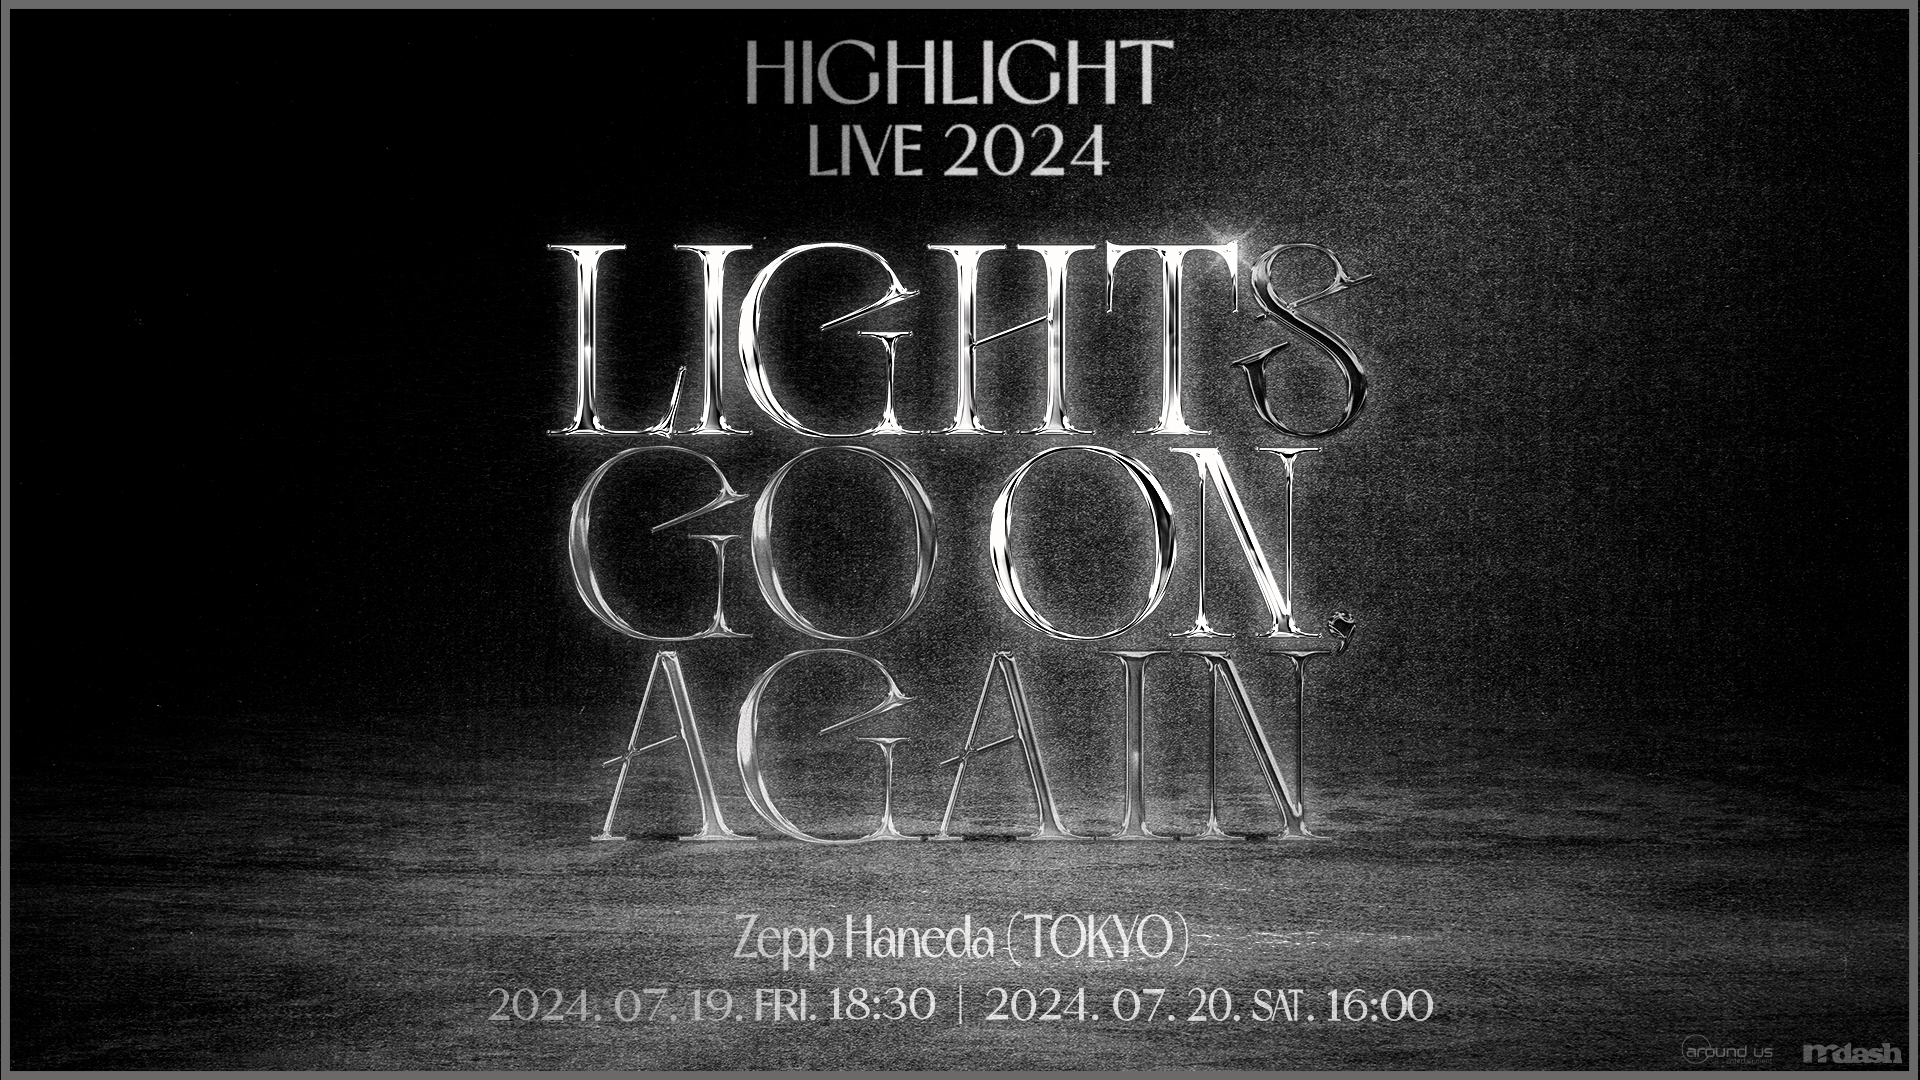 HIGHLIGHT LIVE 2024 [LIGHTS GO ON, AGAIN] in JAPAN